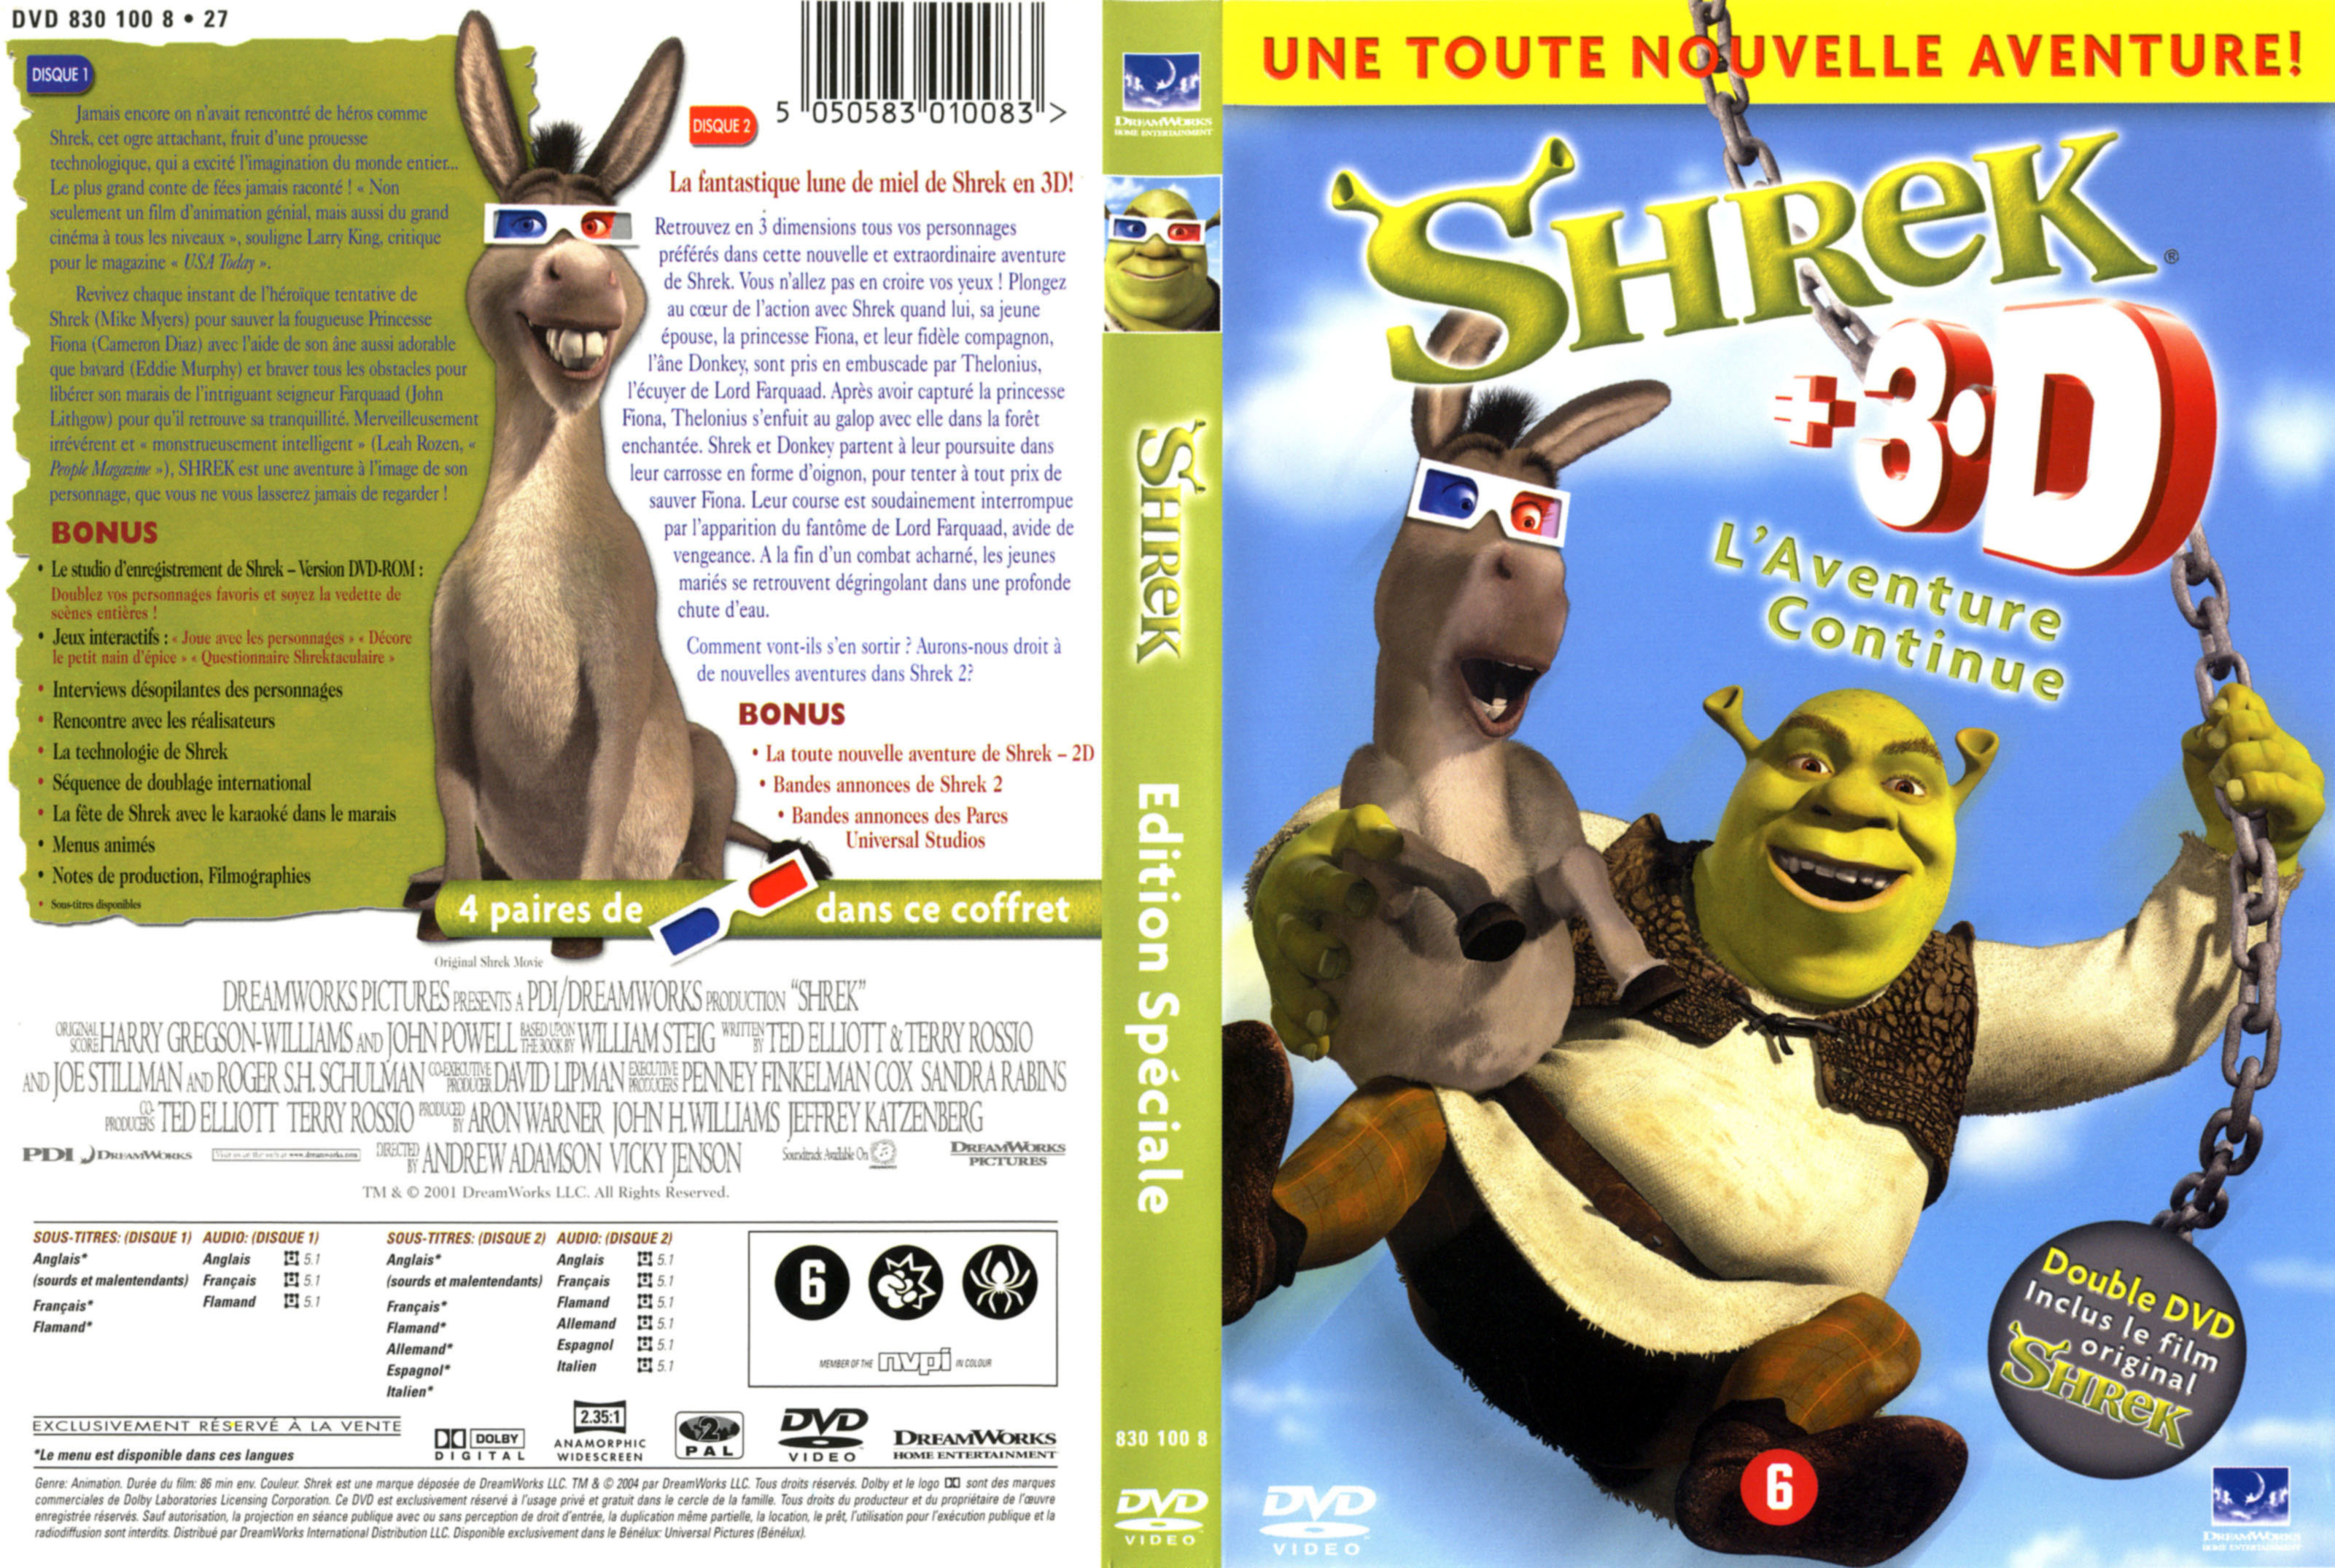 Jaquette DVD Shrek 3D